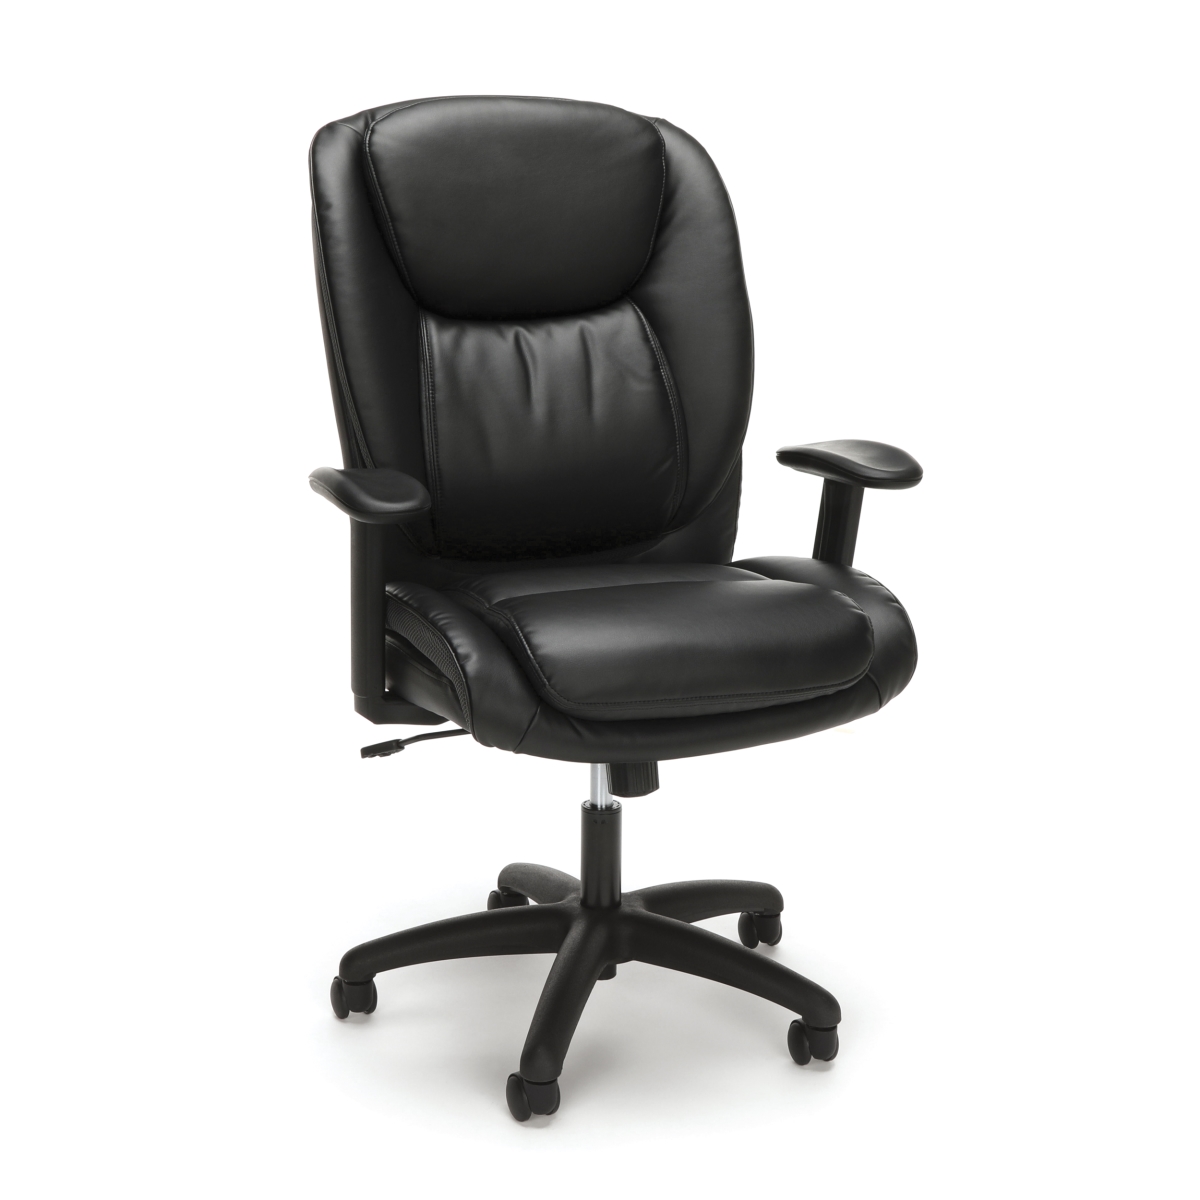 Ess-6032-blk High Back Executive Chair, Black